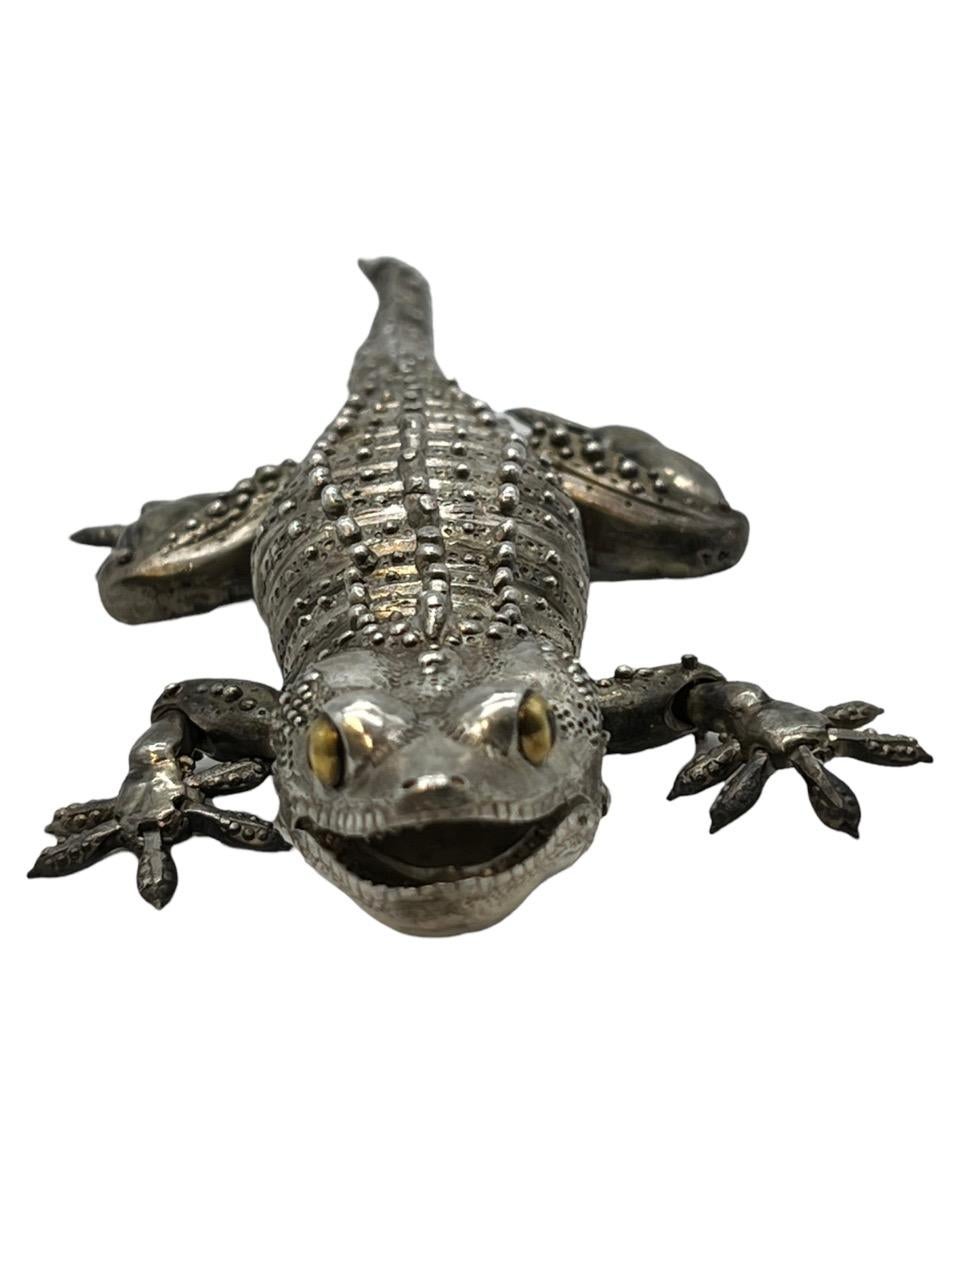 Oleg Konstantinov Fully Articulated Gecko Made of Sterling Silver For Sale 5